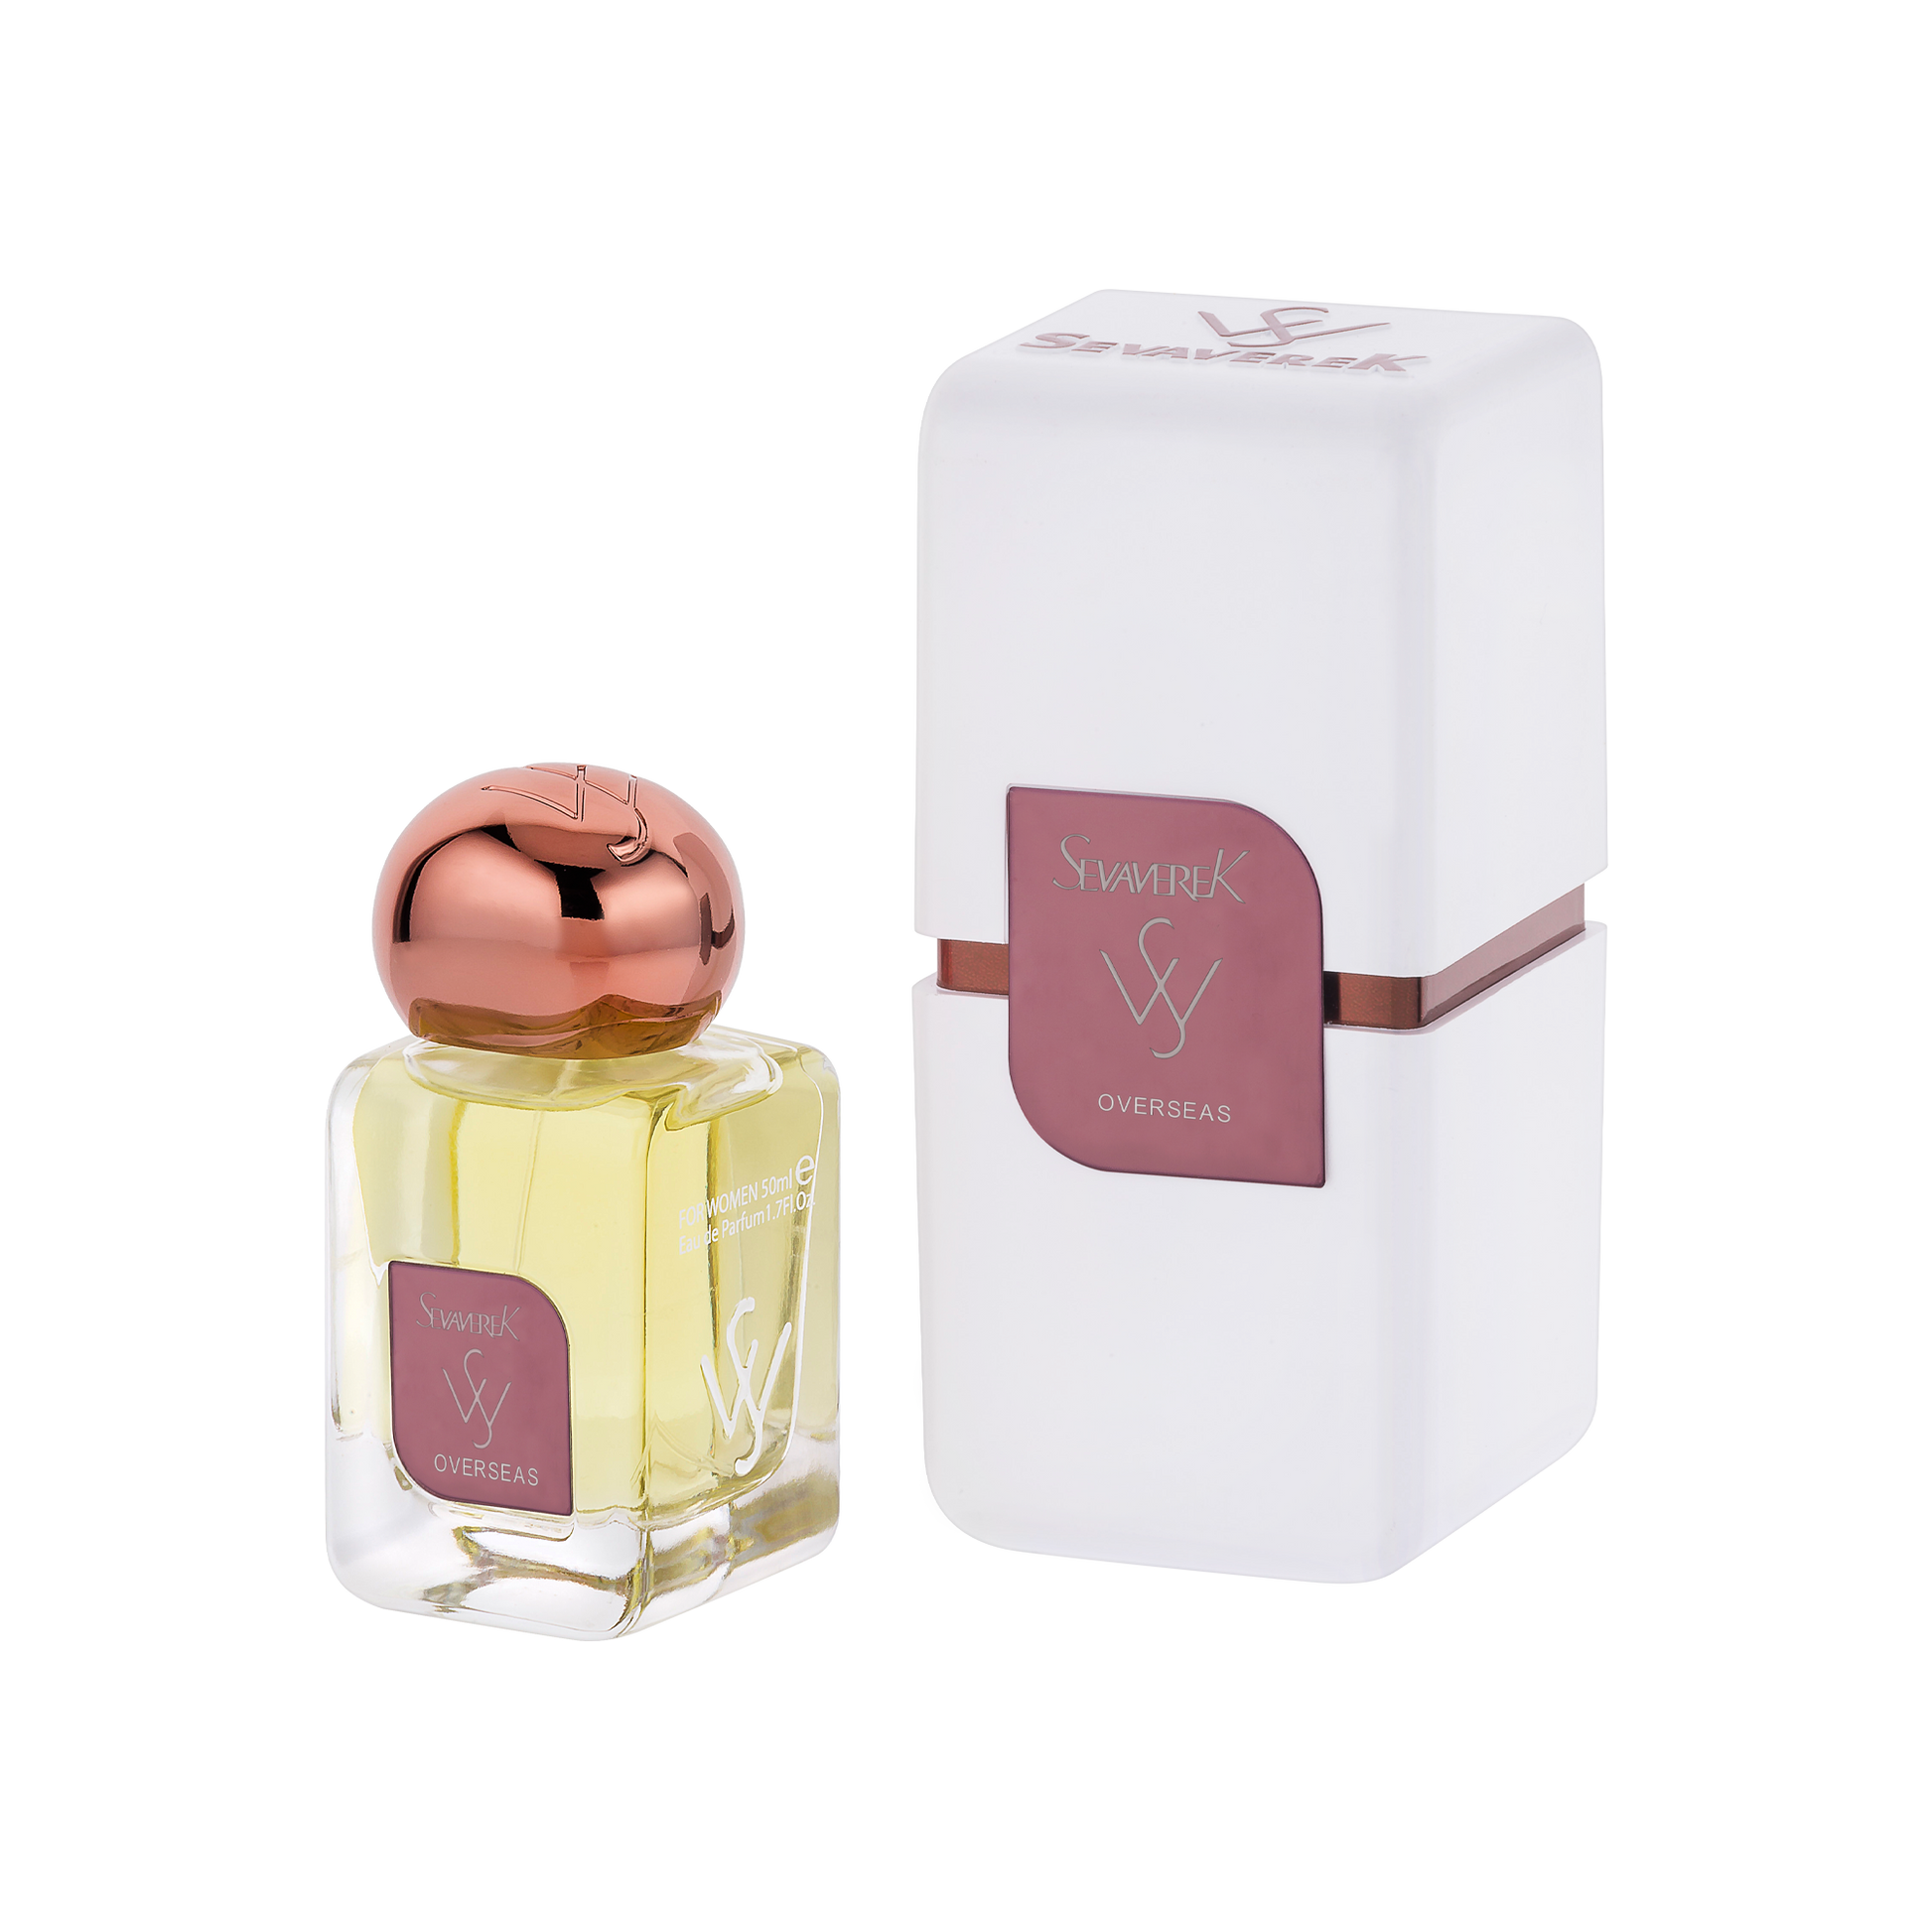 SEVAVEREK - 5014 - Overseas - Shaik Perfume